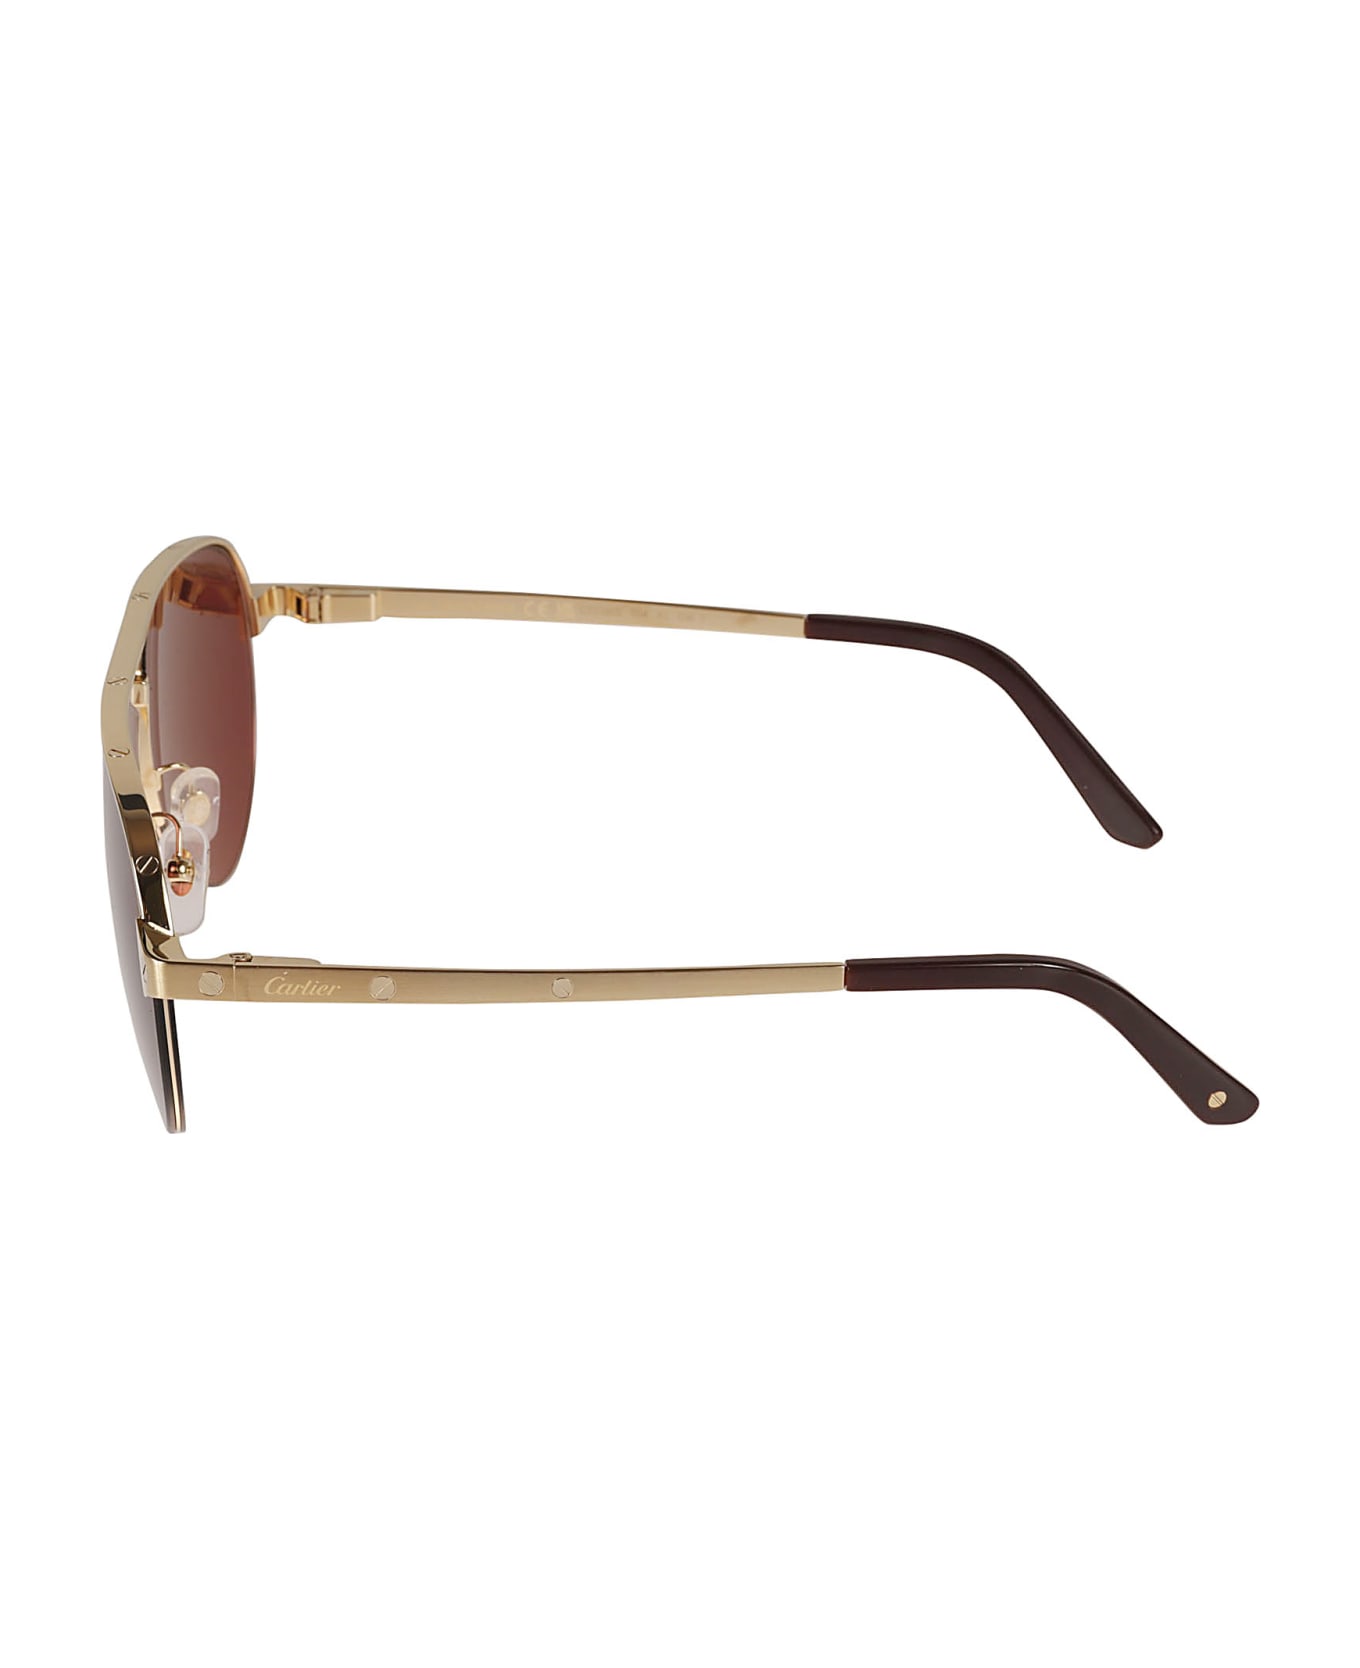 Cartier Eyewear Aviator Classic Sunglasses - Gold/Red